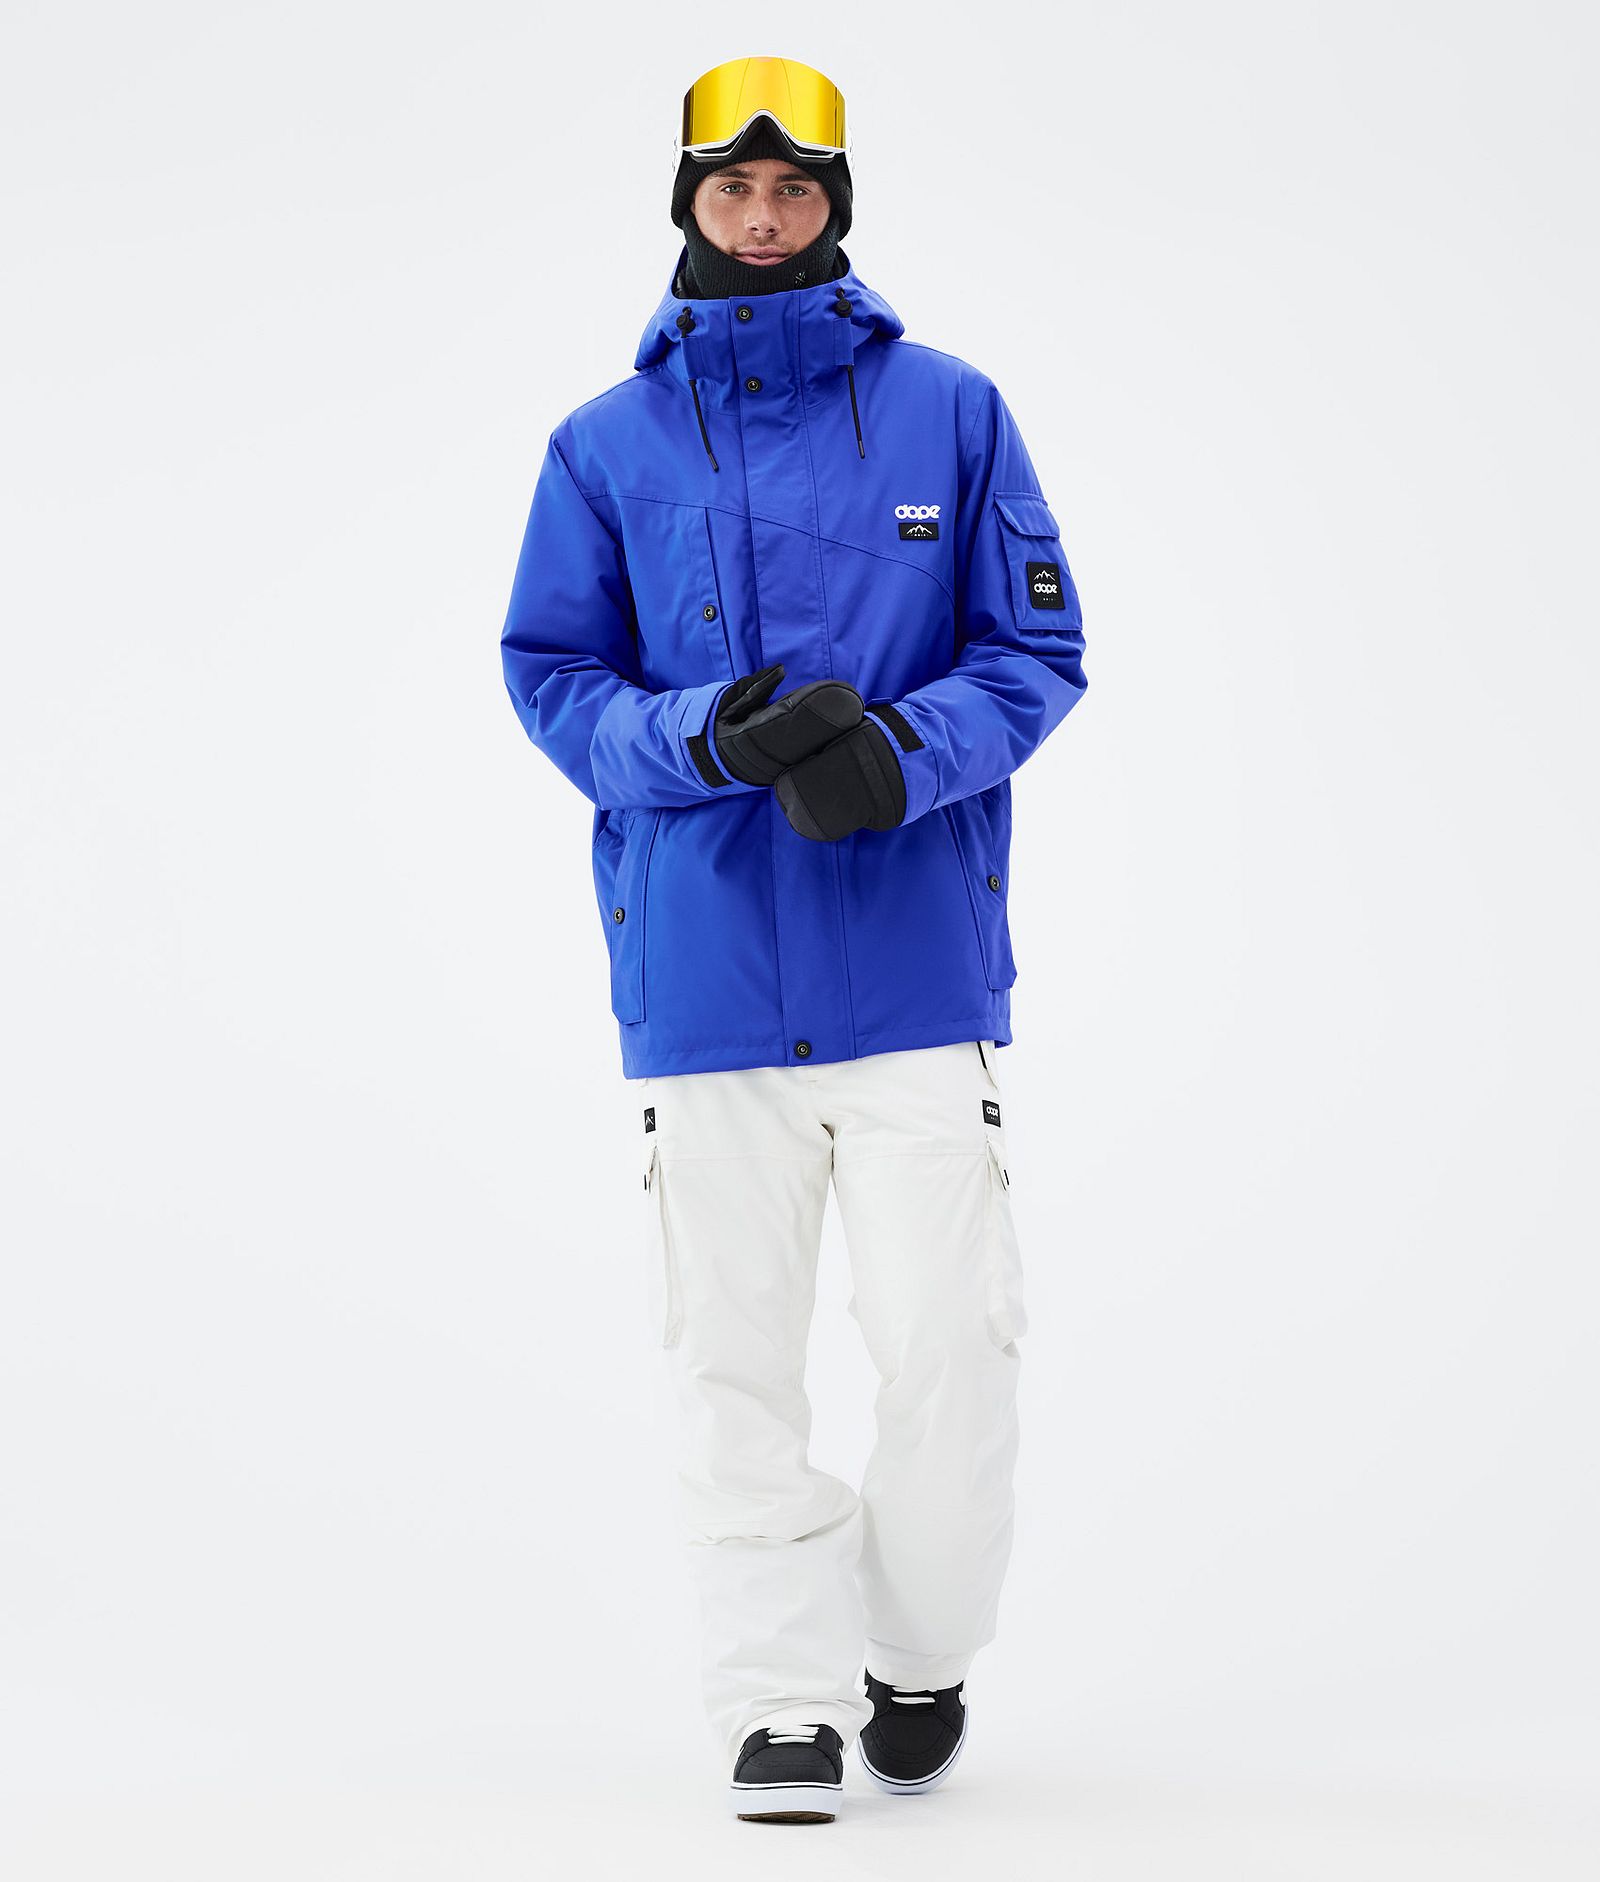 Adept Snowboard Jacket Men Cobalt Blue